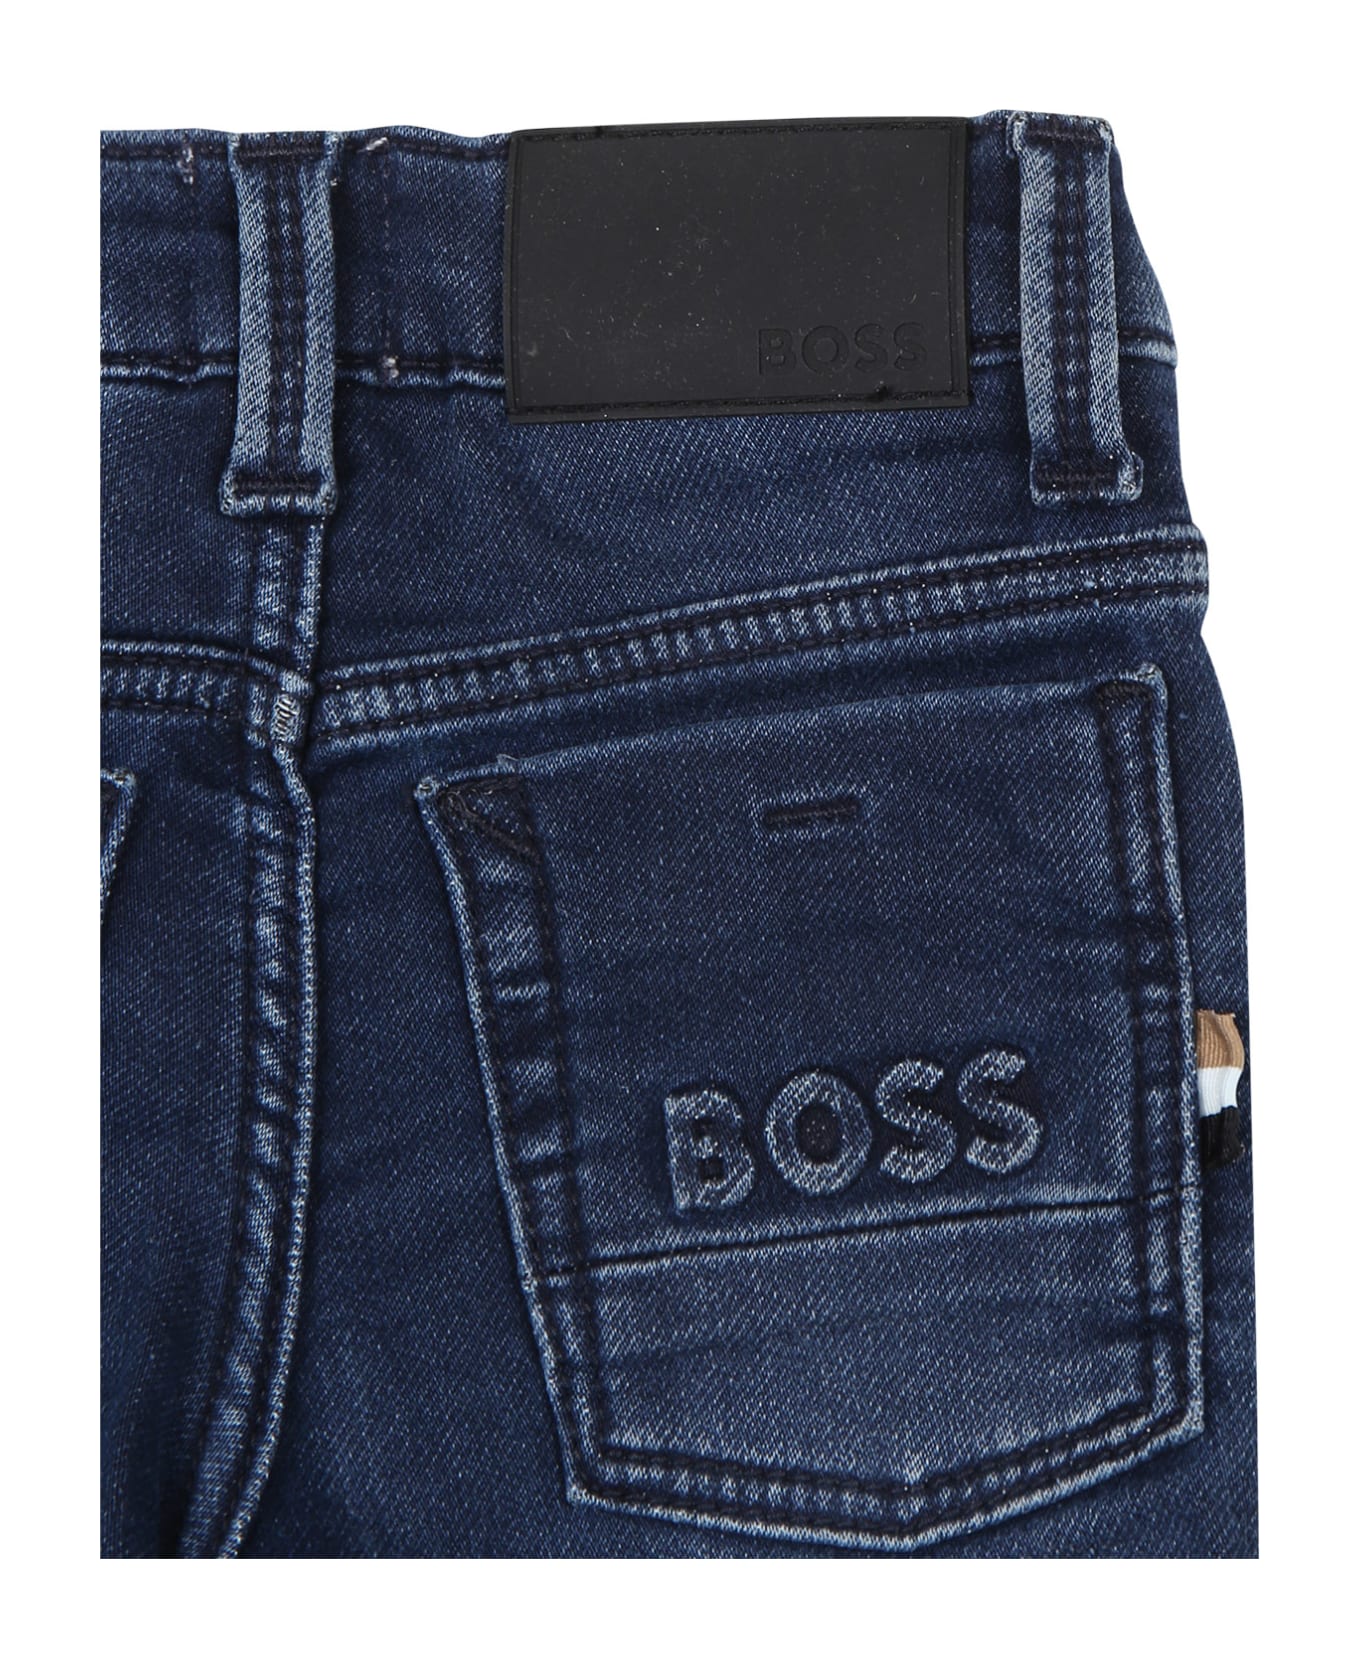 Hugo Boss Blue Jeans For Baby Boy With Logo - Denim